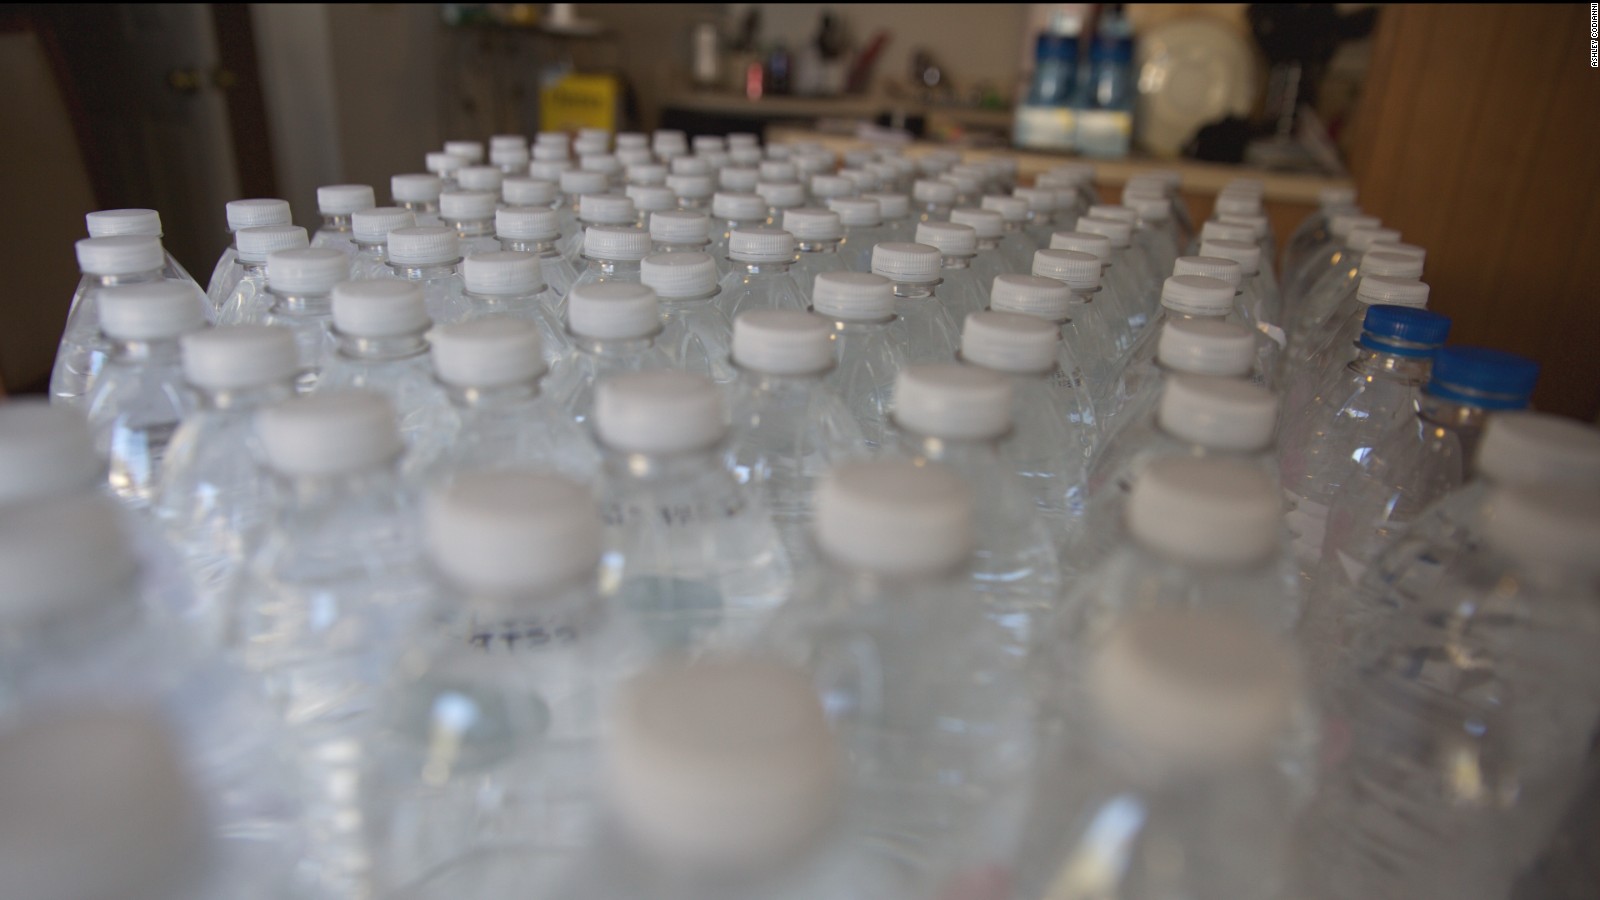 Formula to increase body immunity is hidden in alkaline water industry